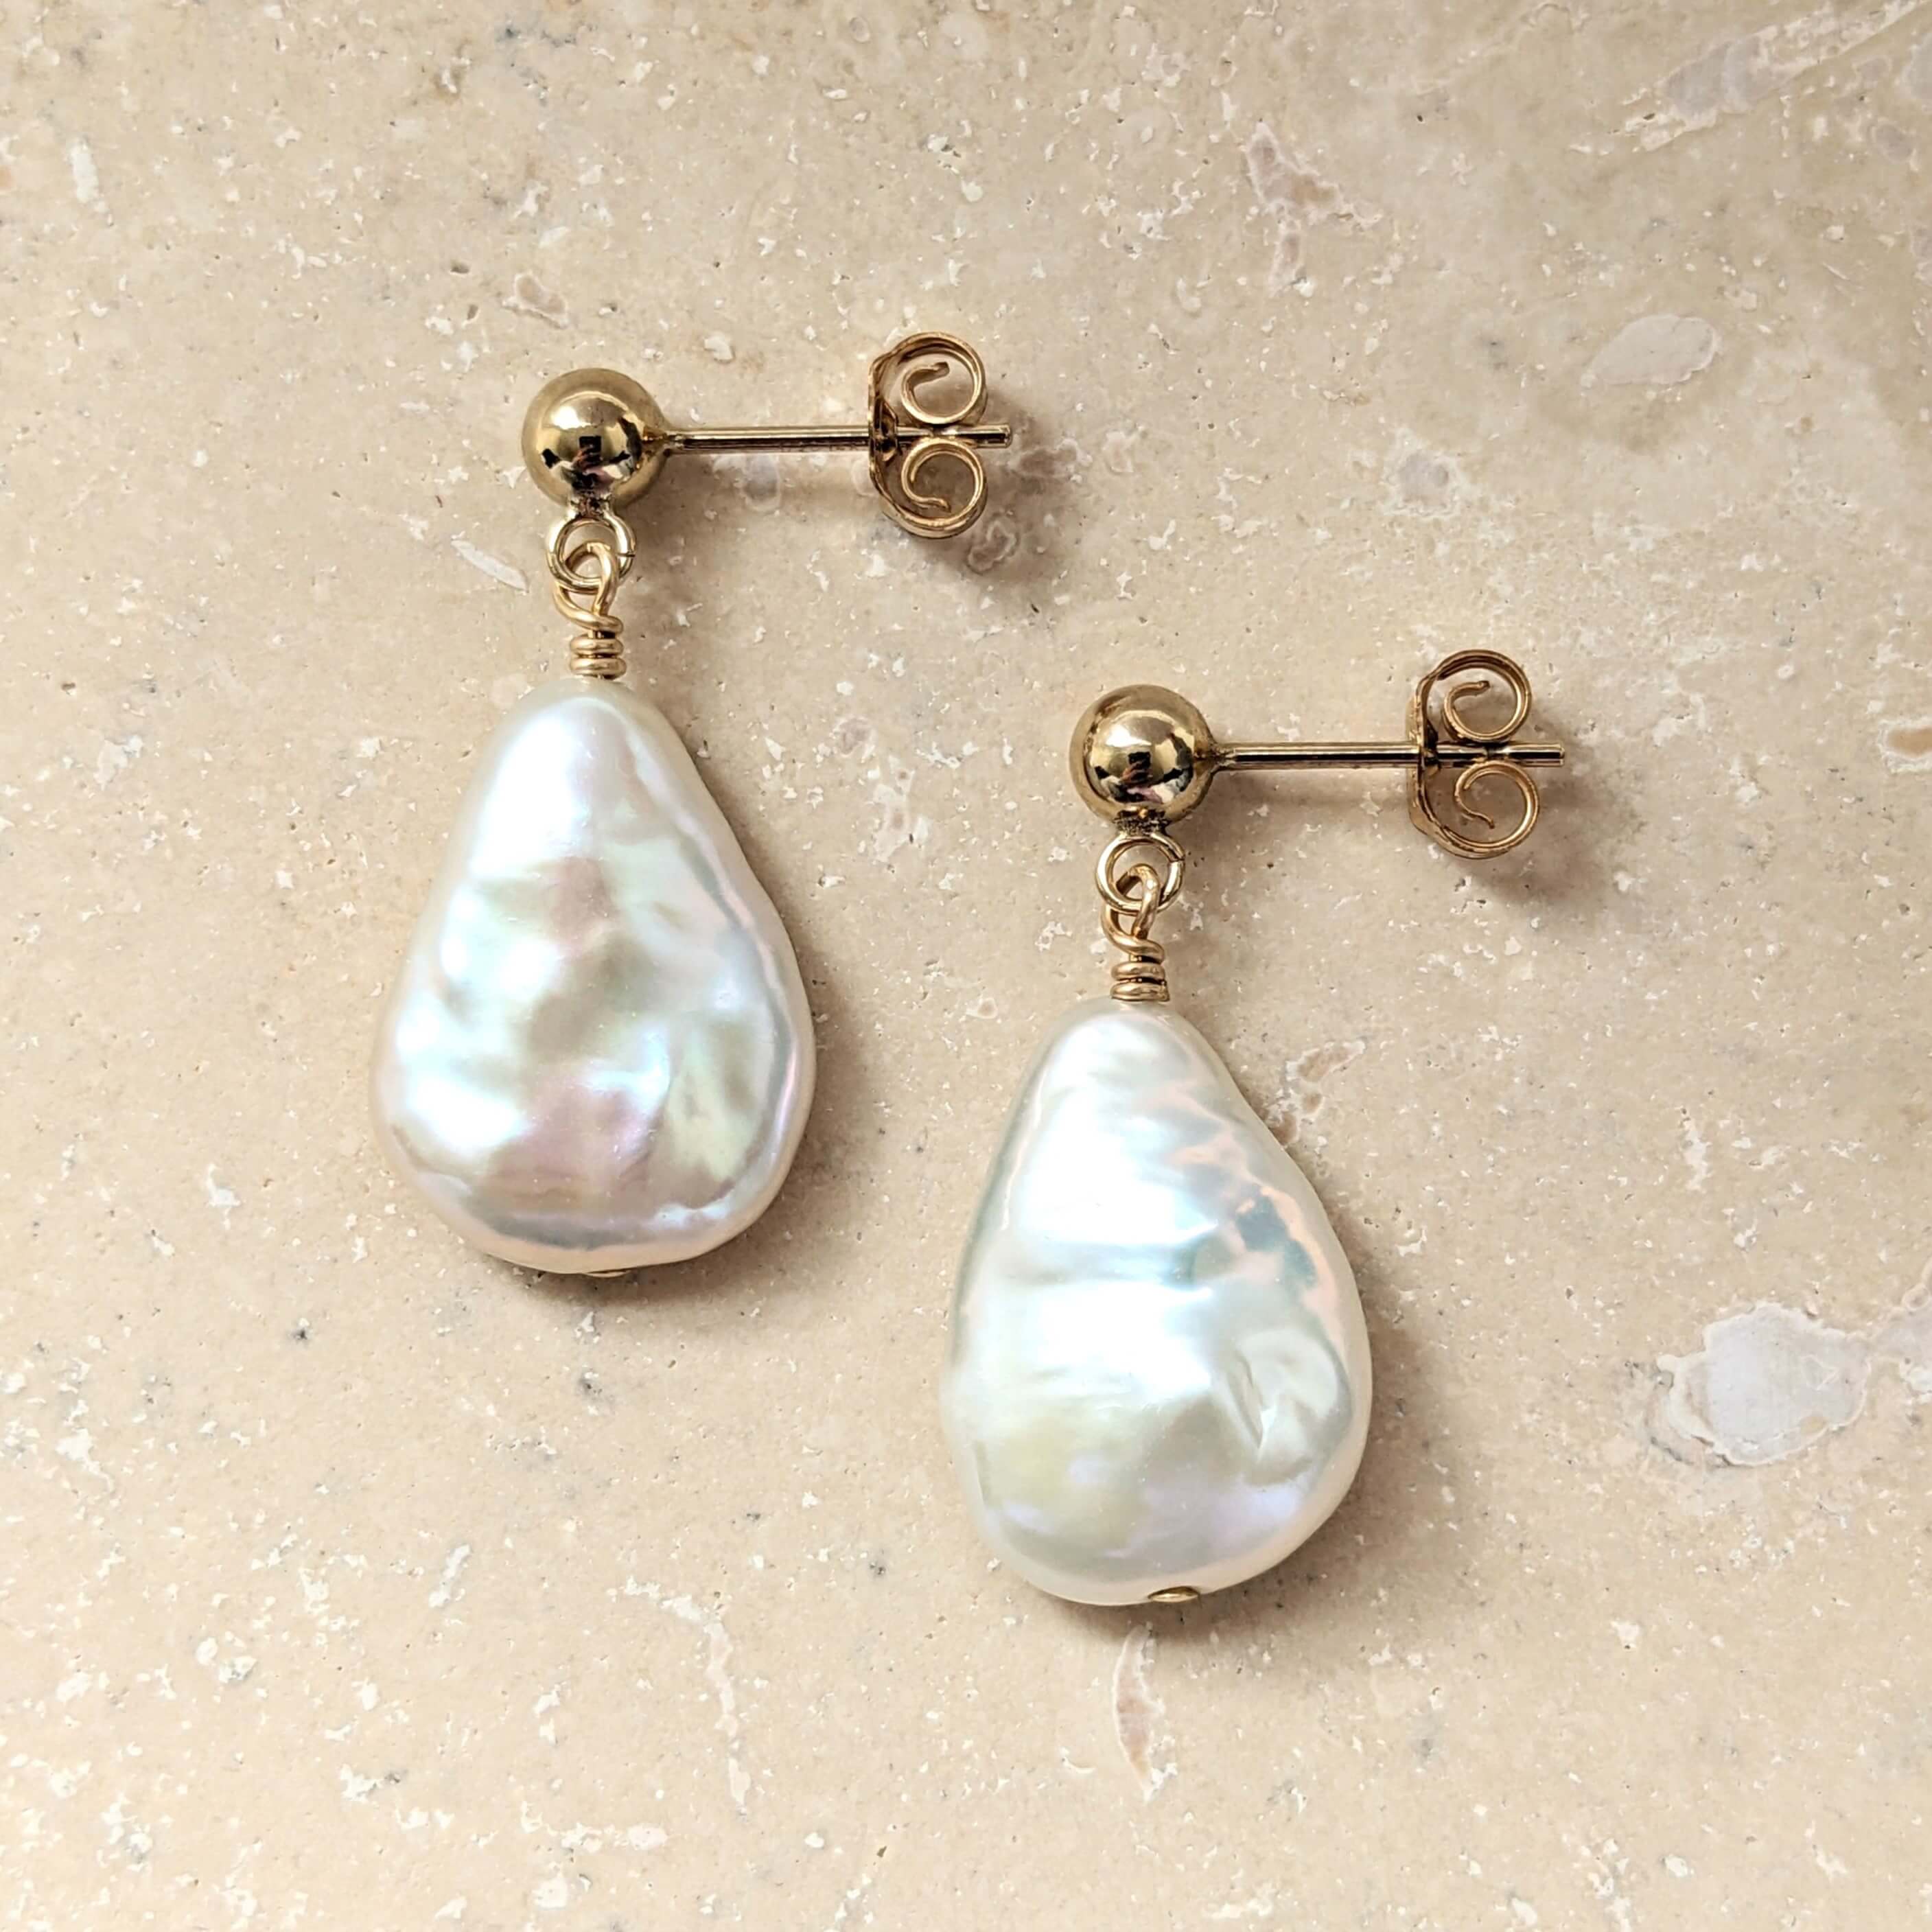 Flat teardrop shaped pearl earring with gold ball stud